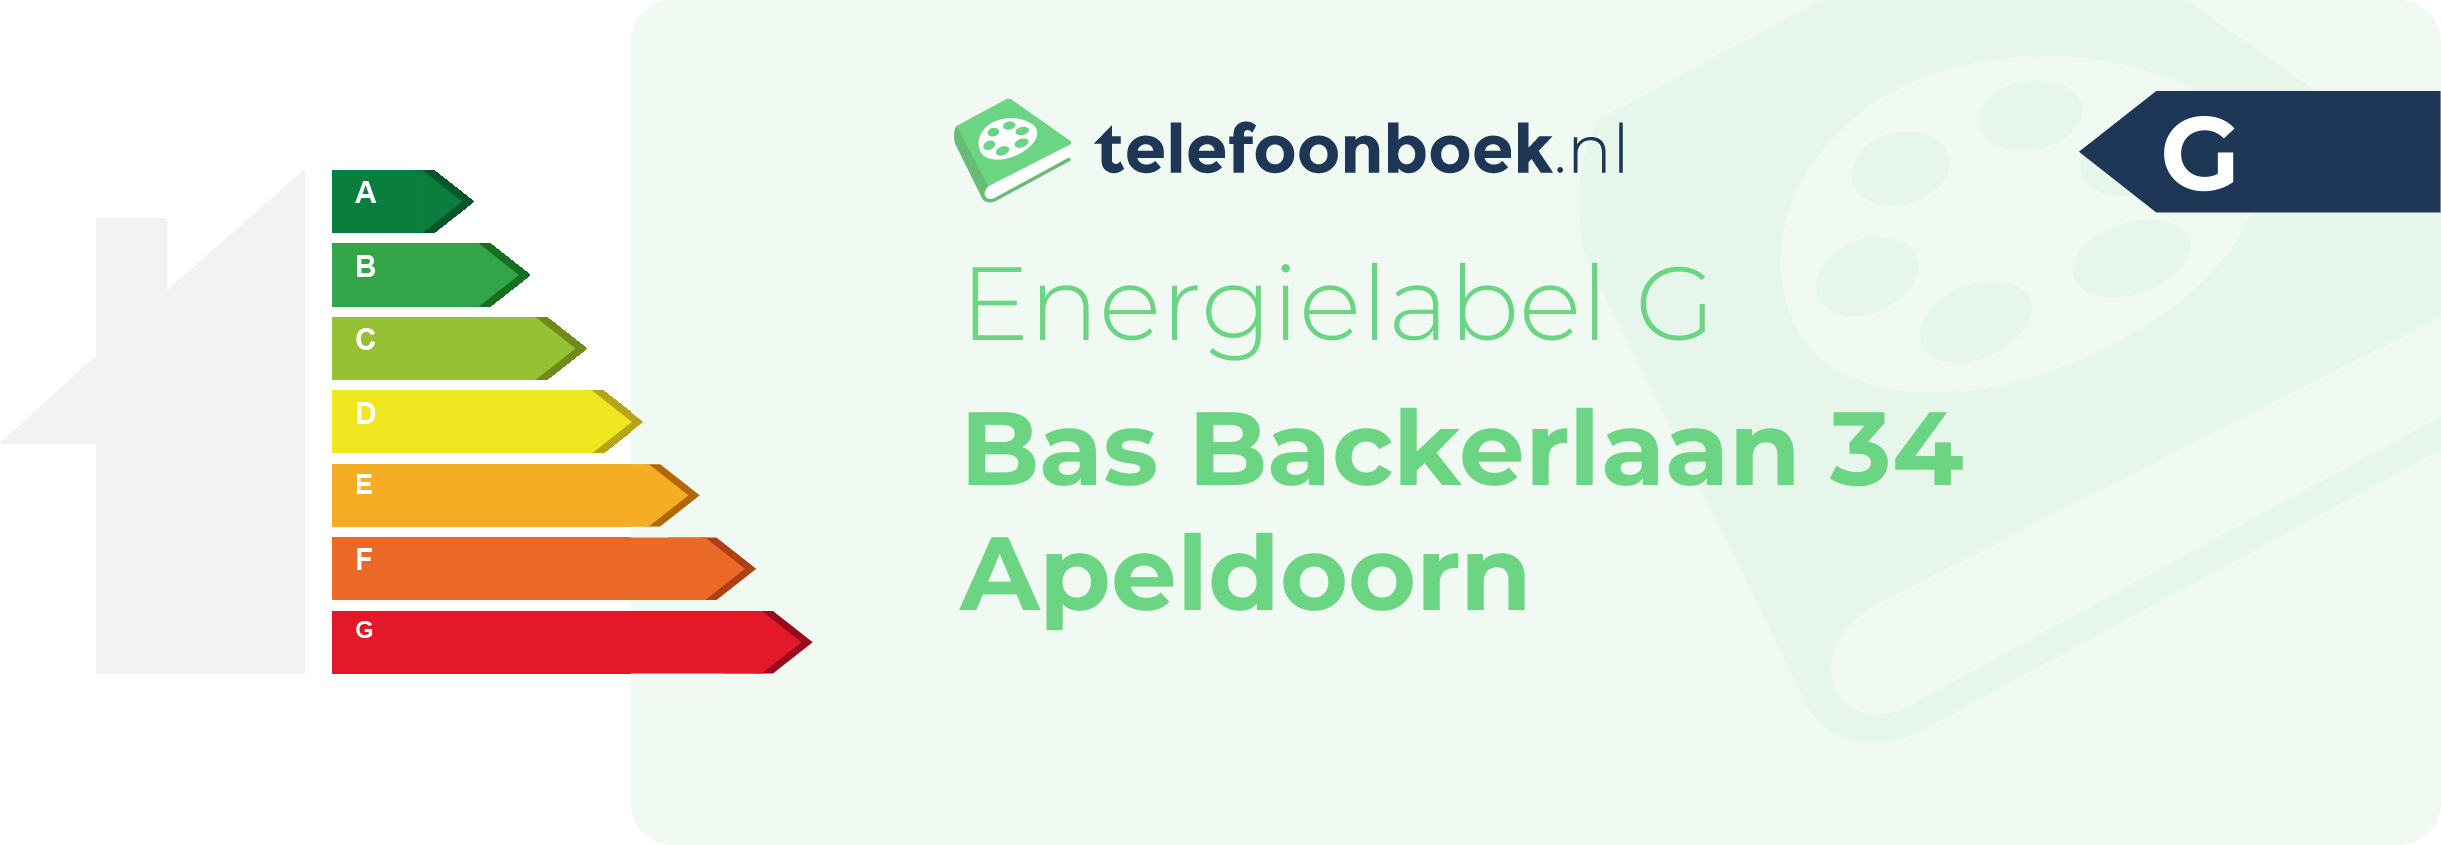 Energielabel Bas Backerlaan 34 Apeldoorn